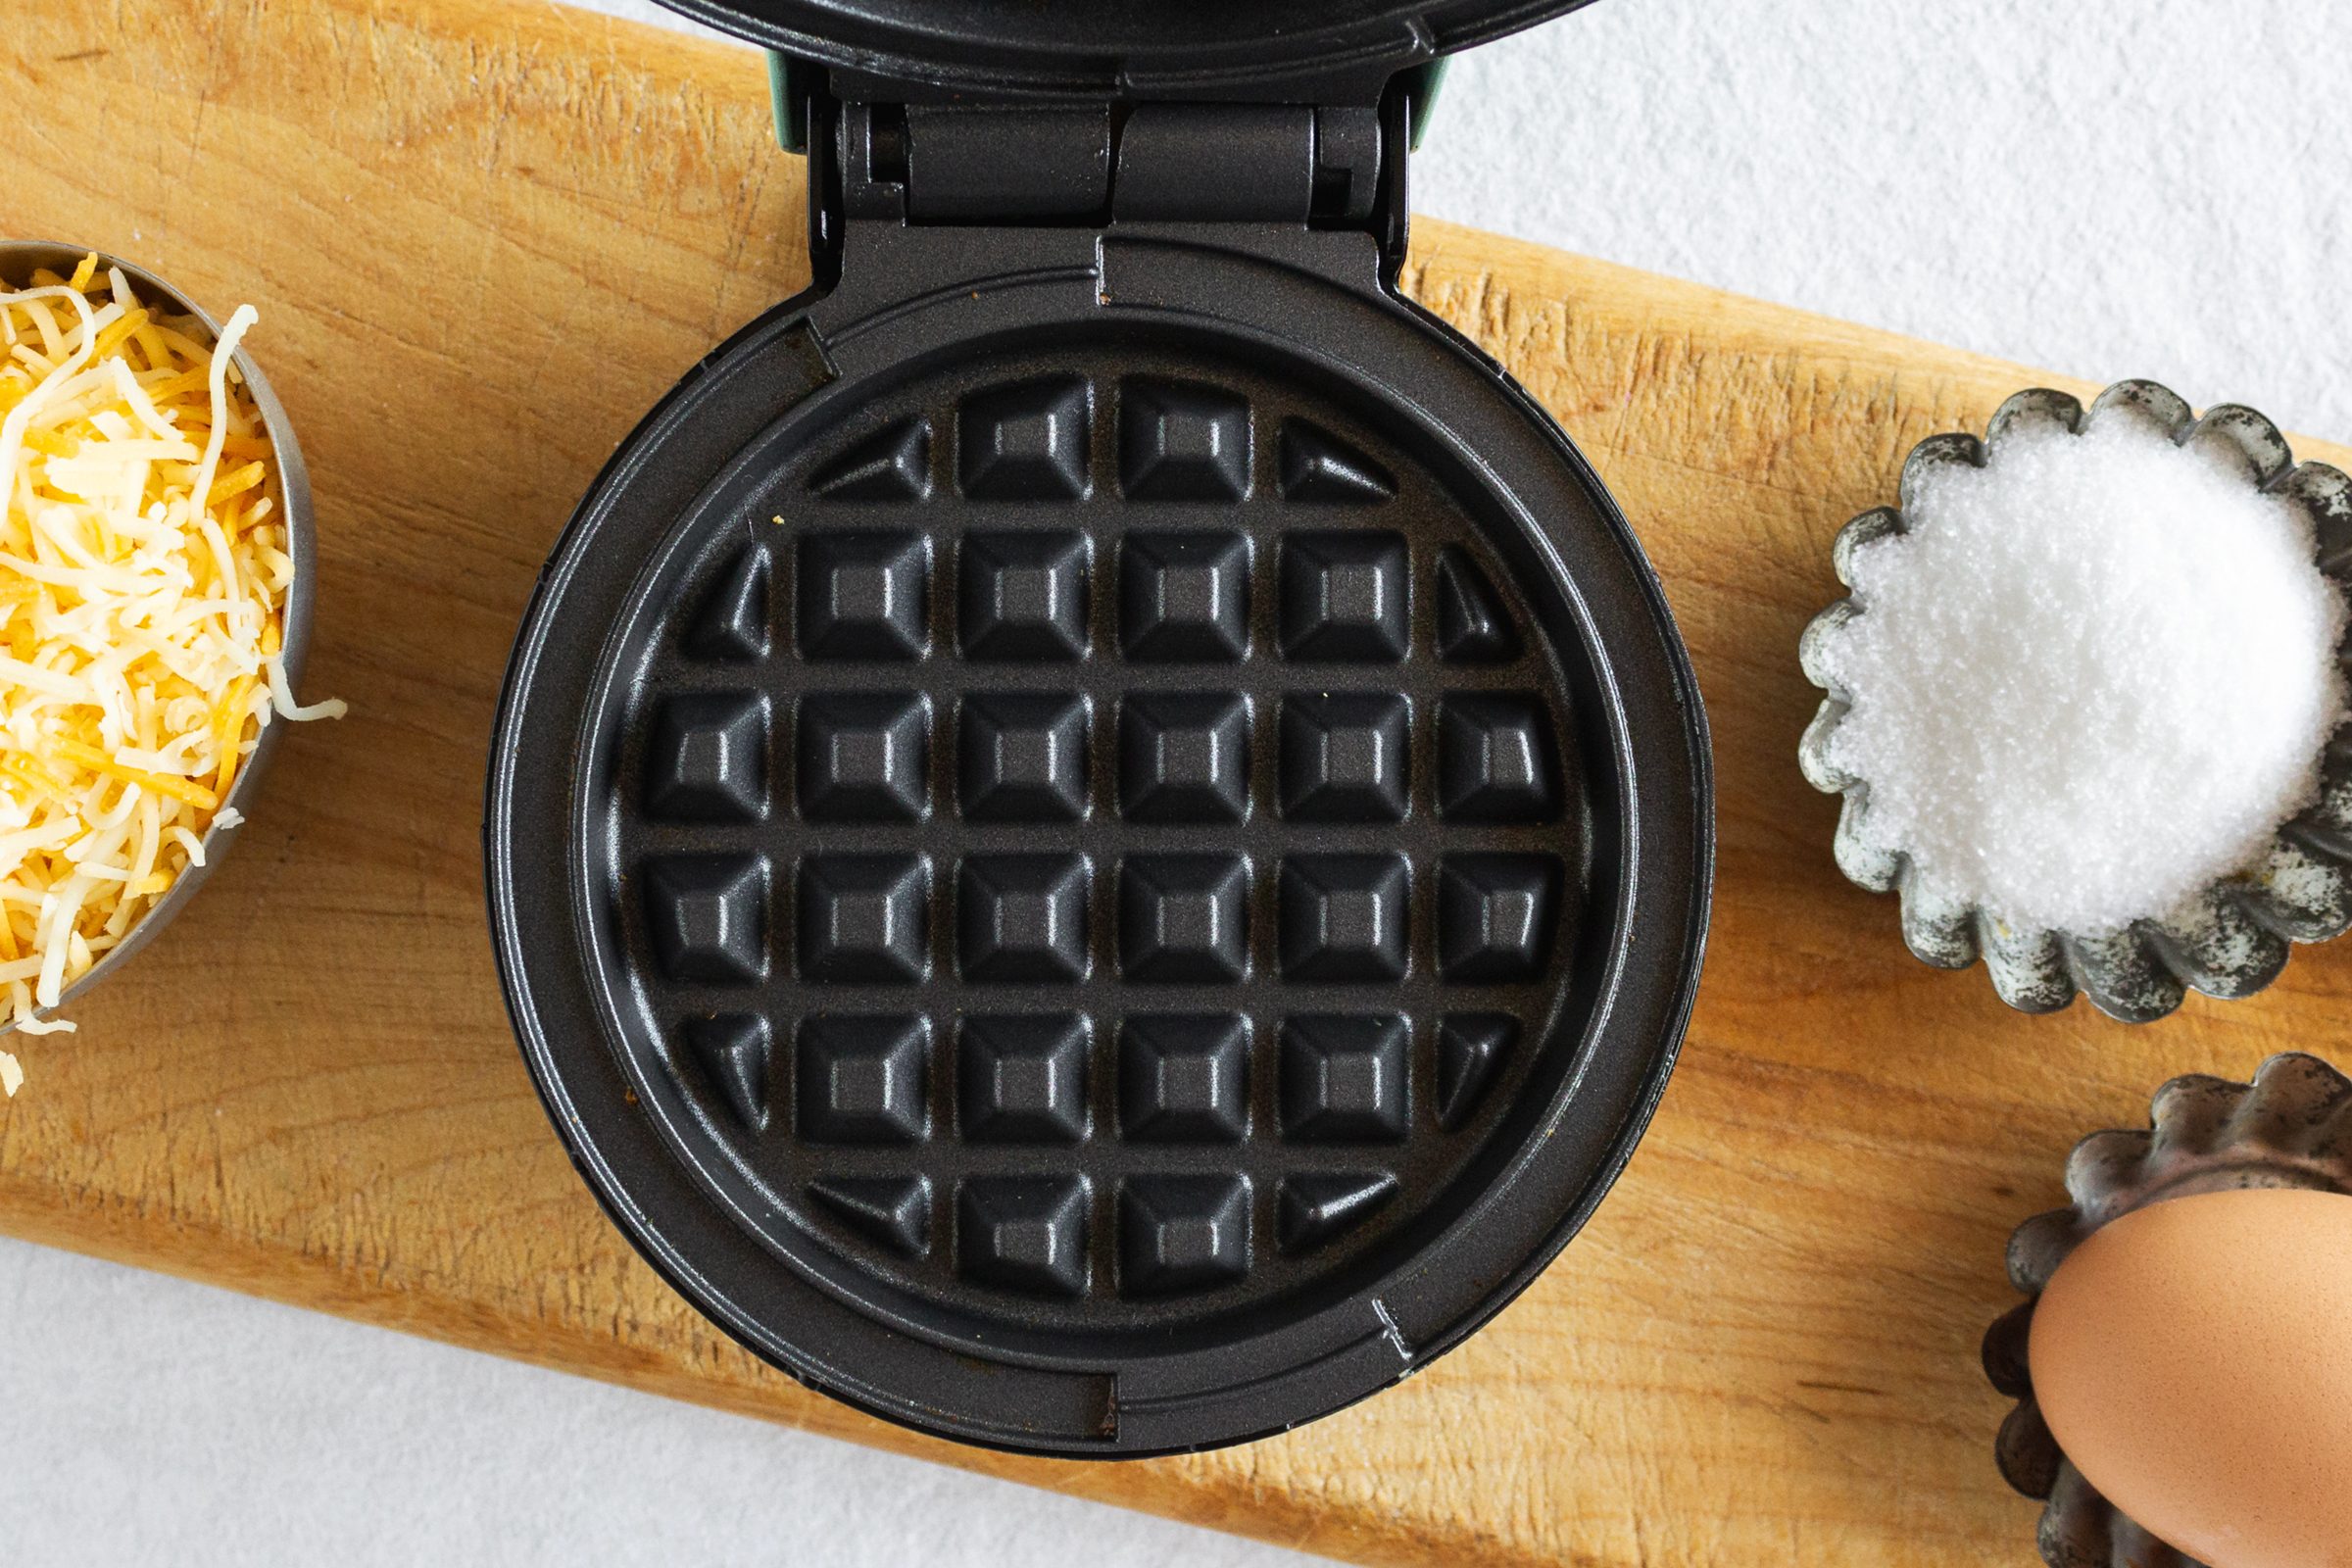 https://www.tasteofhome.com/wp-content/uploads/2021/12/heating-waffle-maker-for-chaffles_nancy-mock.jpg?fit=680%2C454